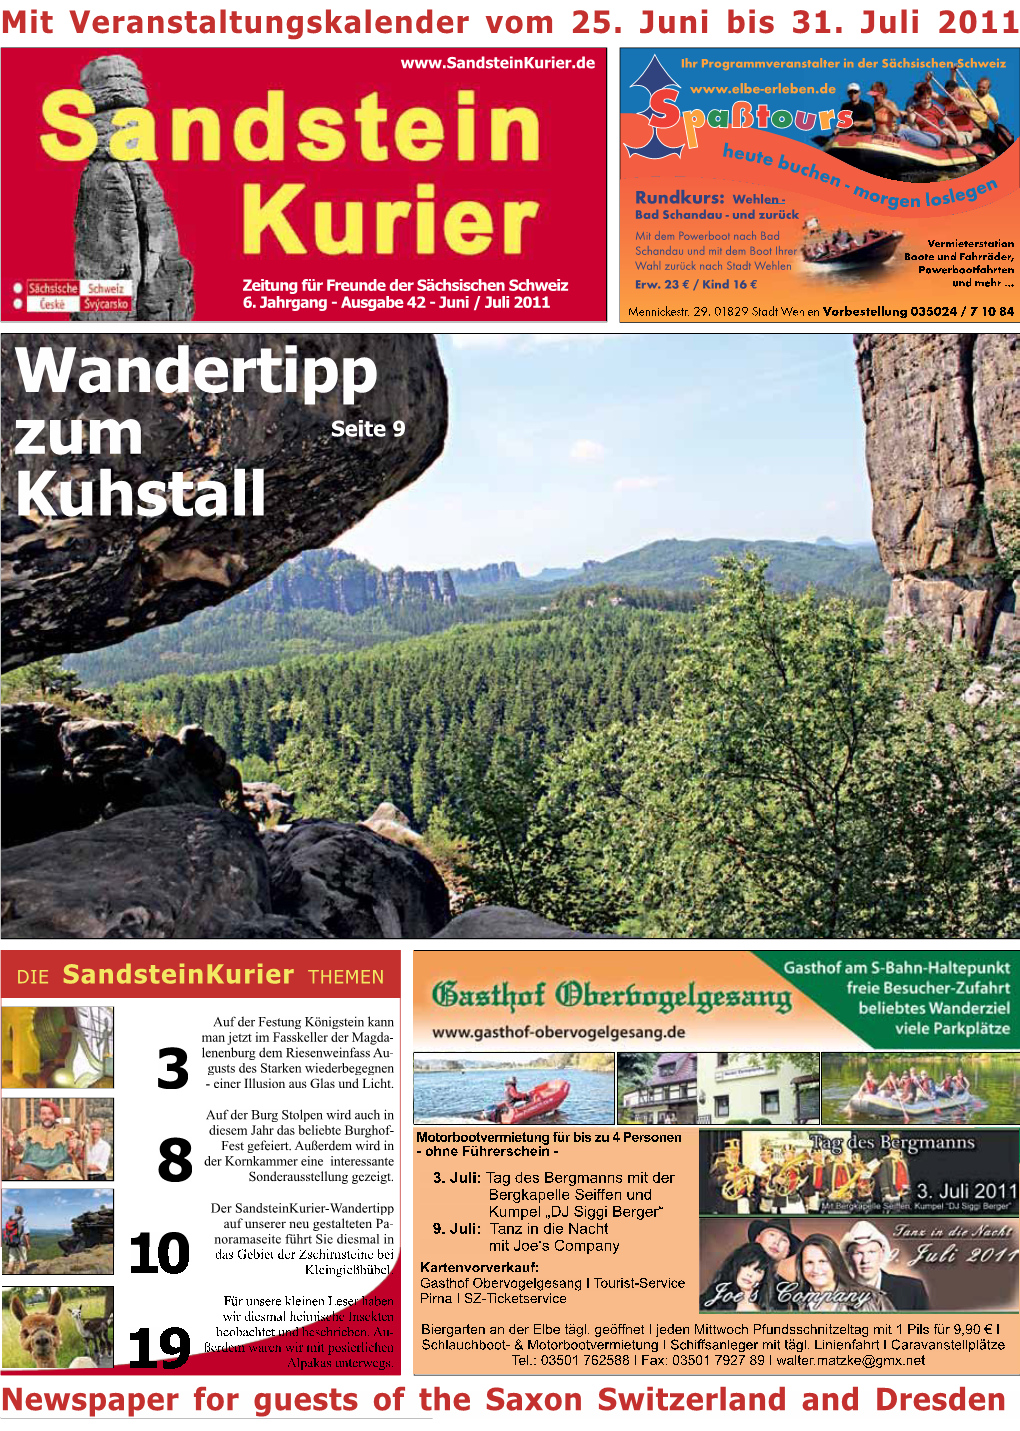 Wandertipp Zum Kuhstall